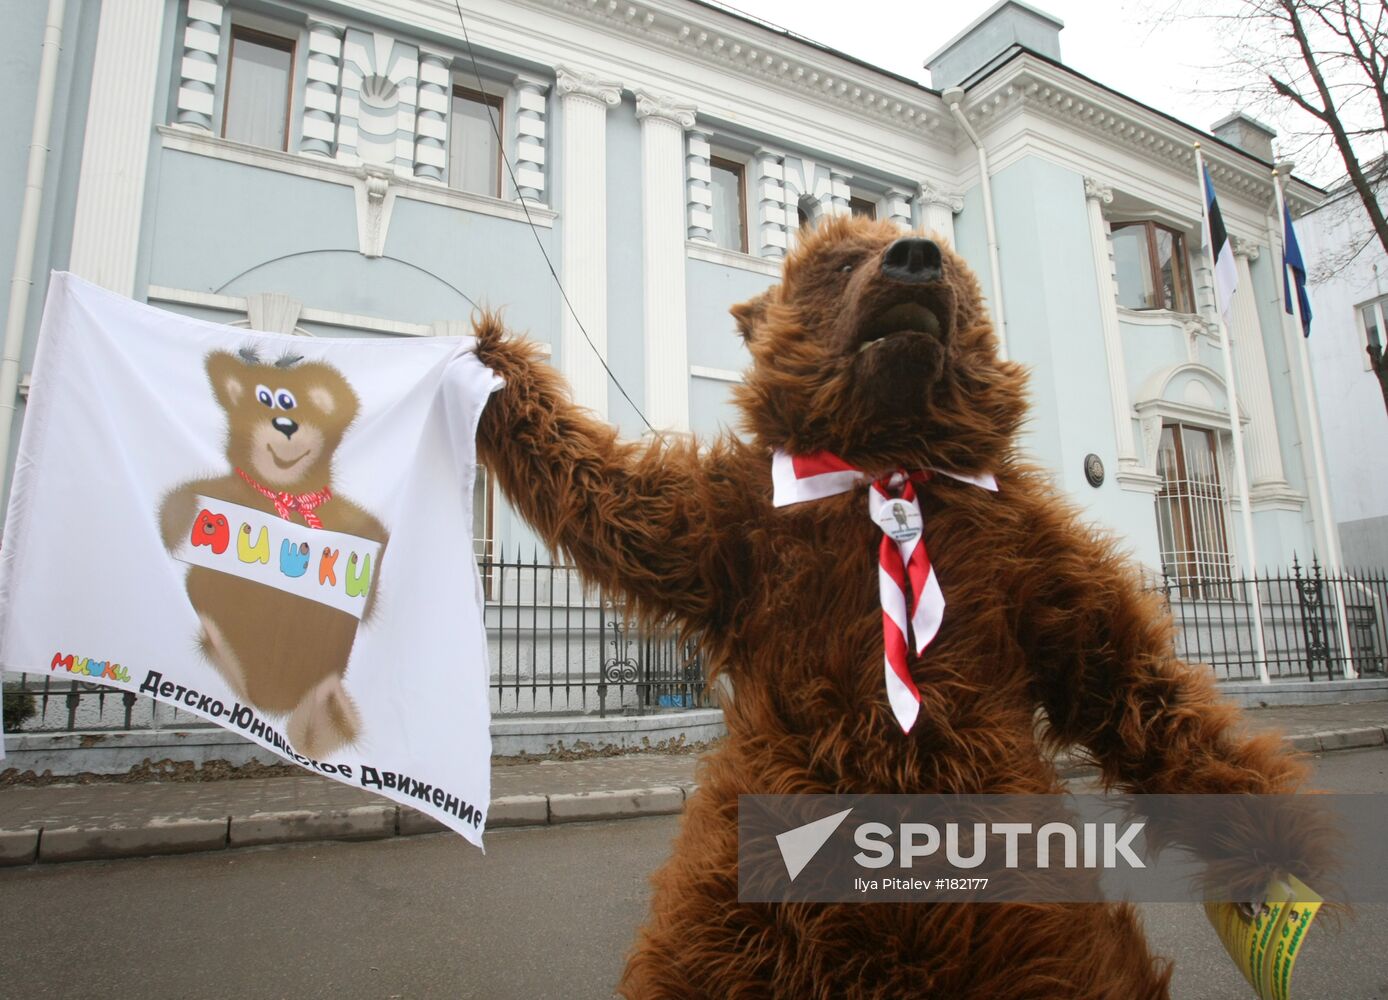 A protest near the Estonian Embassy